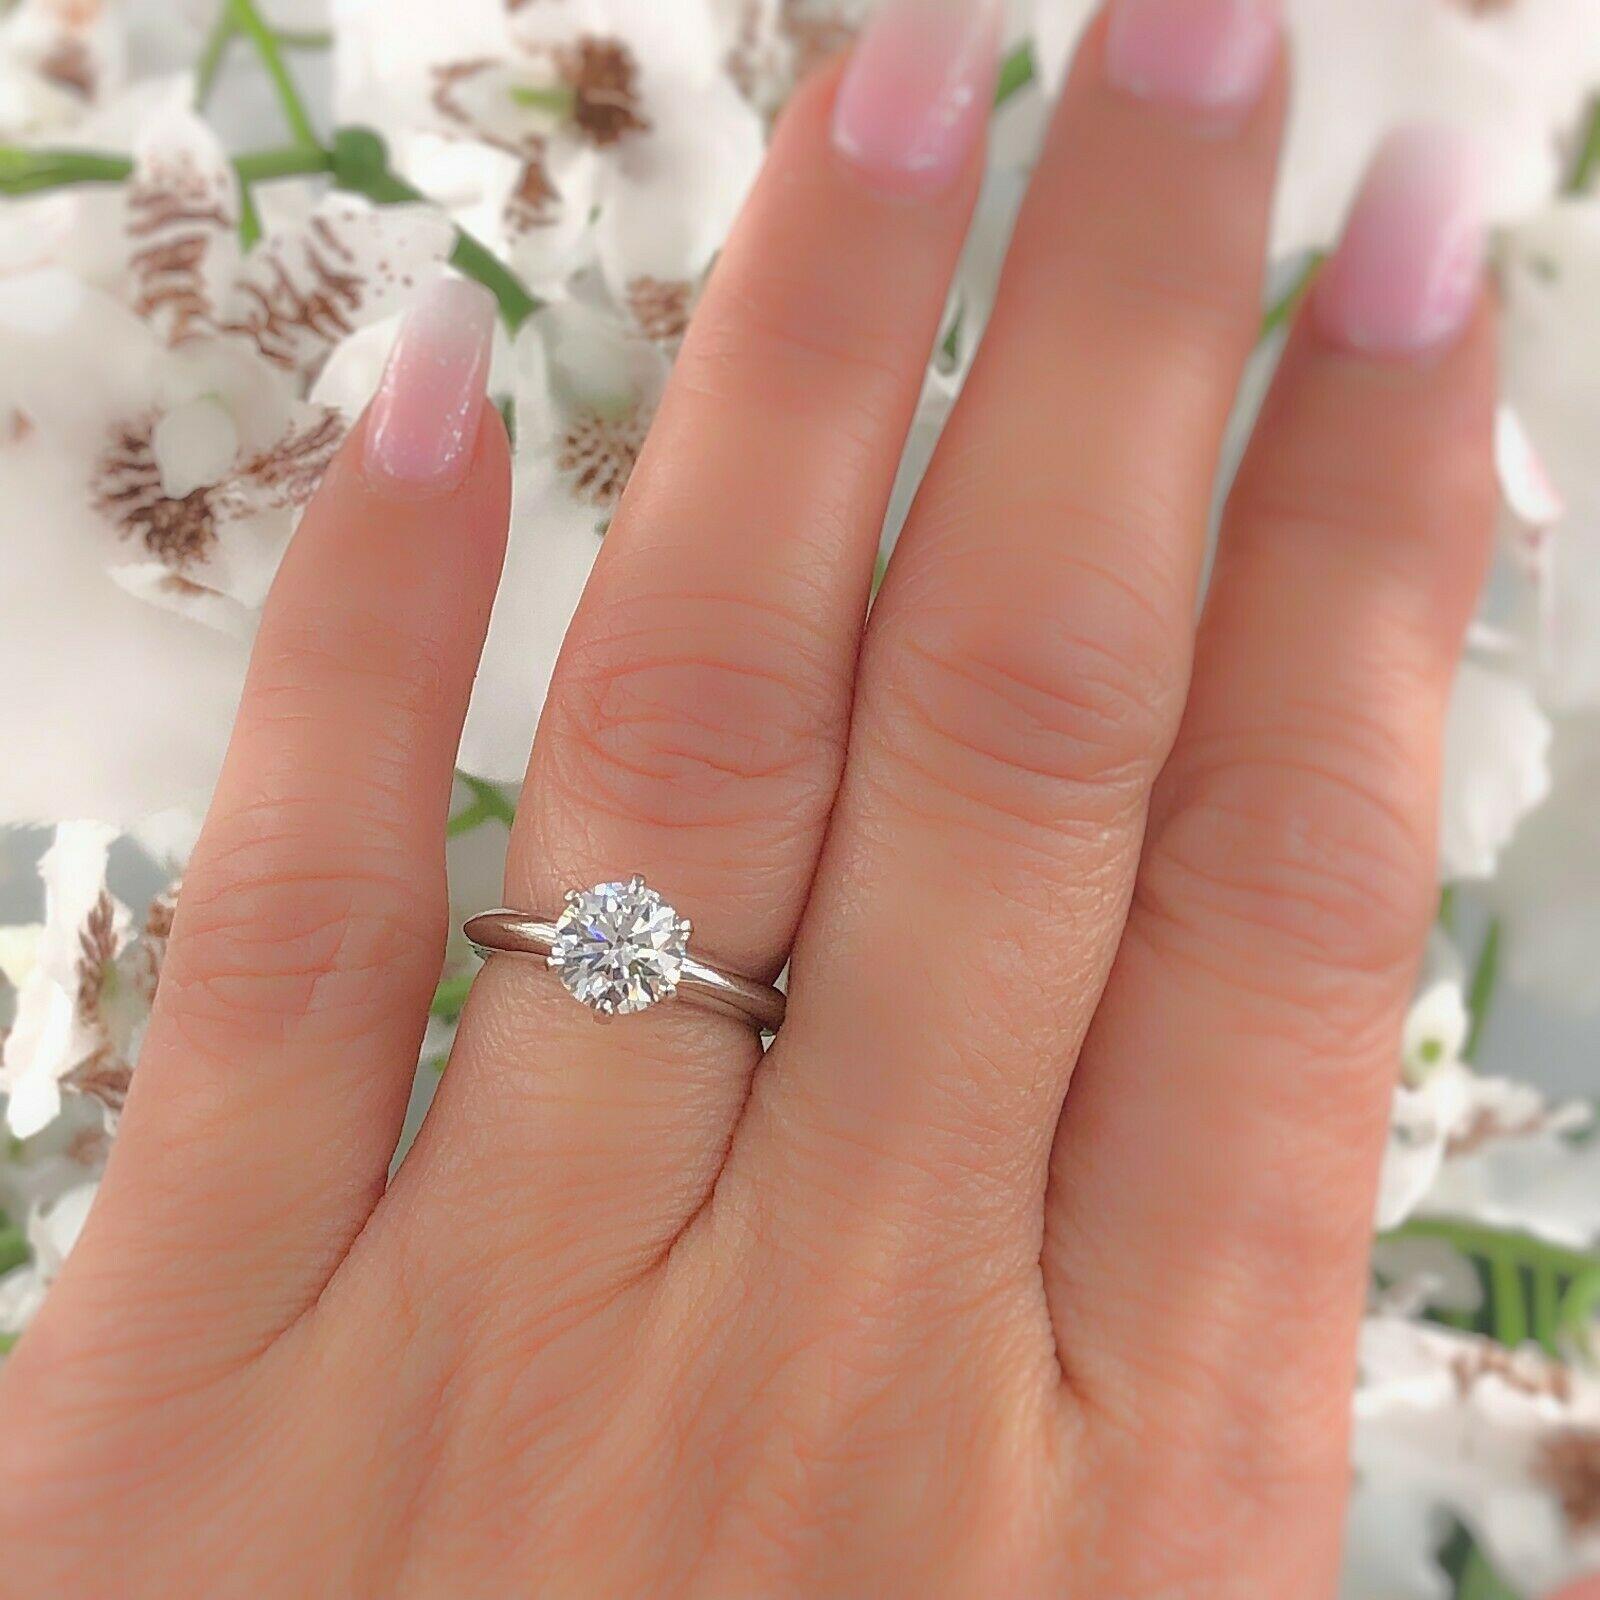 tiffany engagement ring on finger